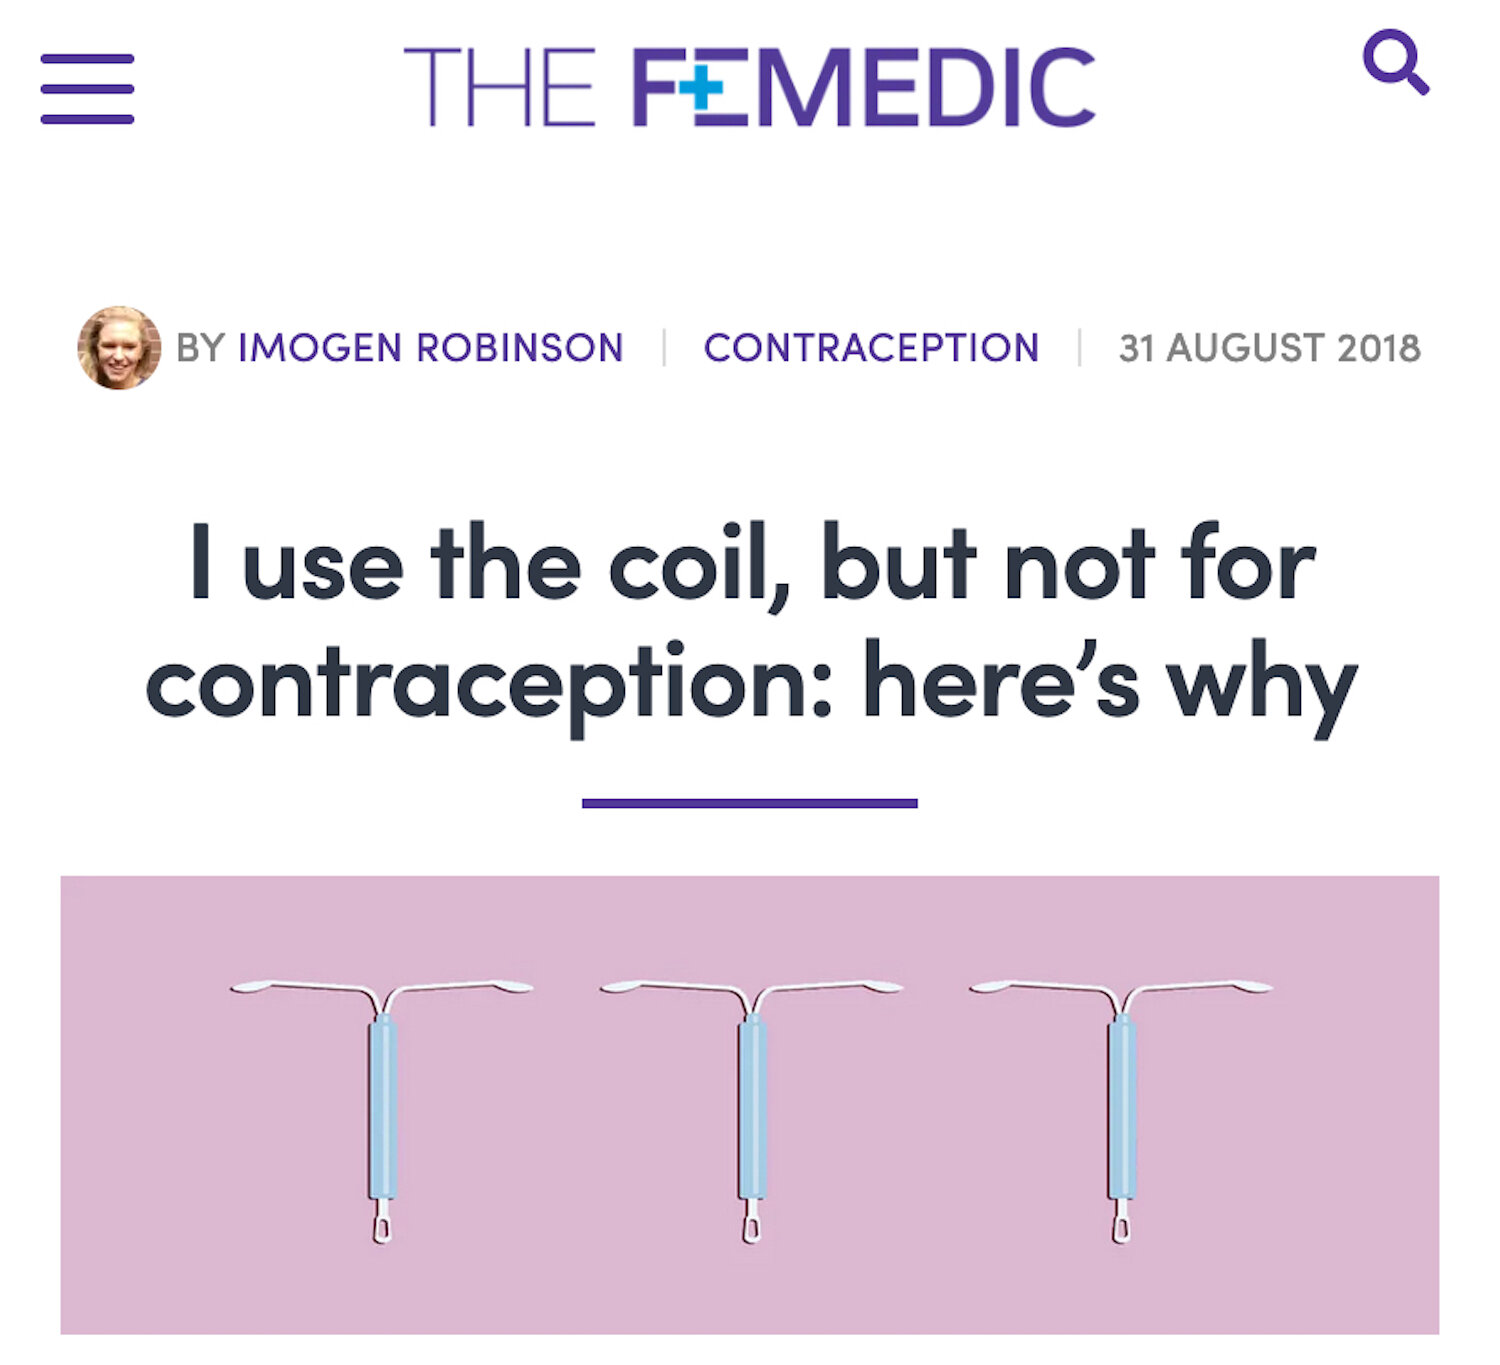 August 31, 2018 - The Femedic